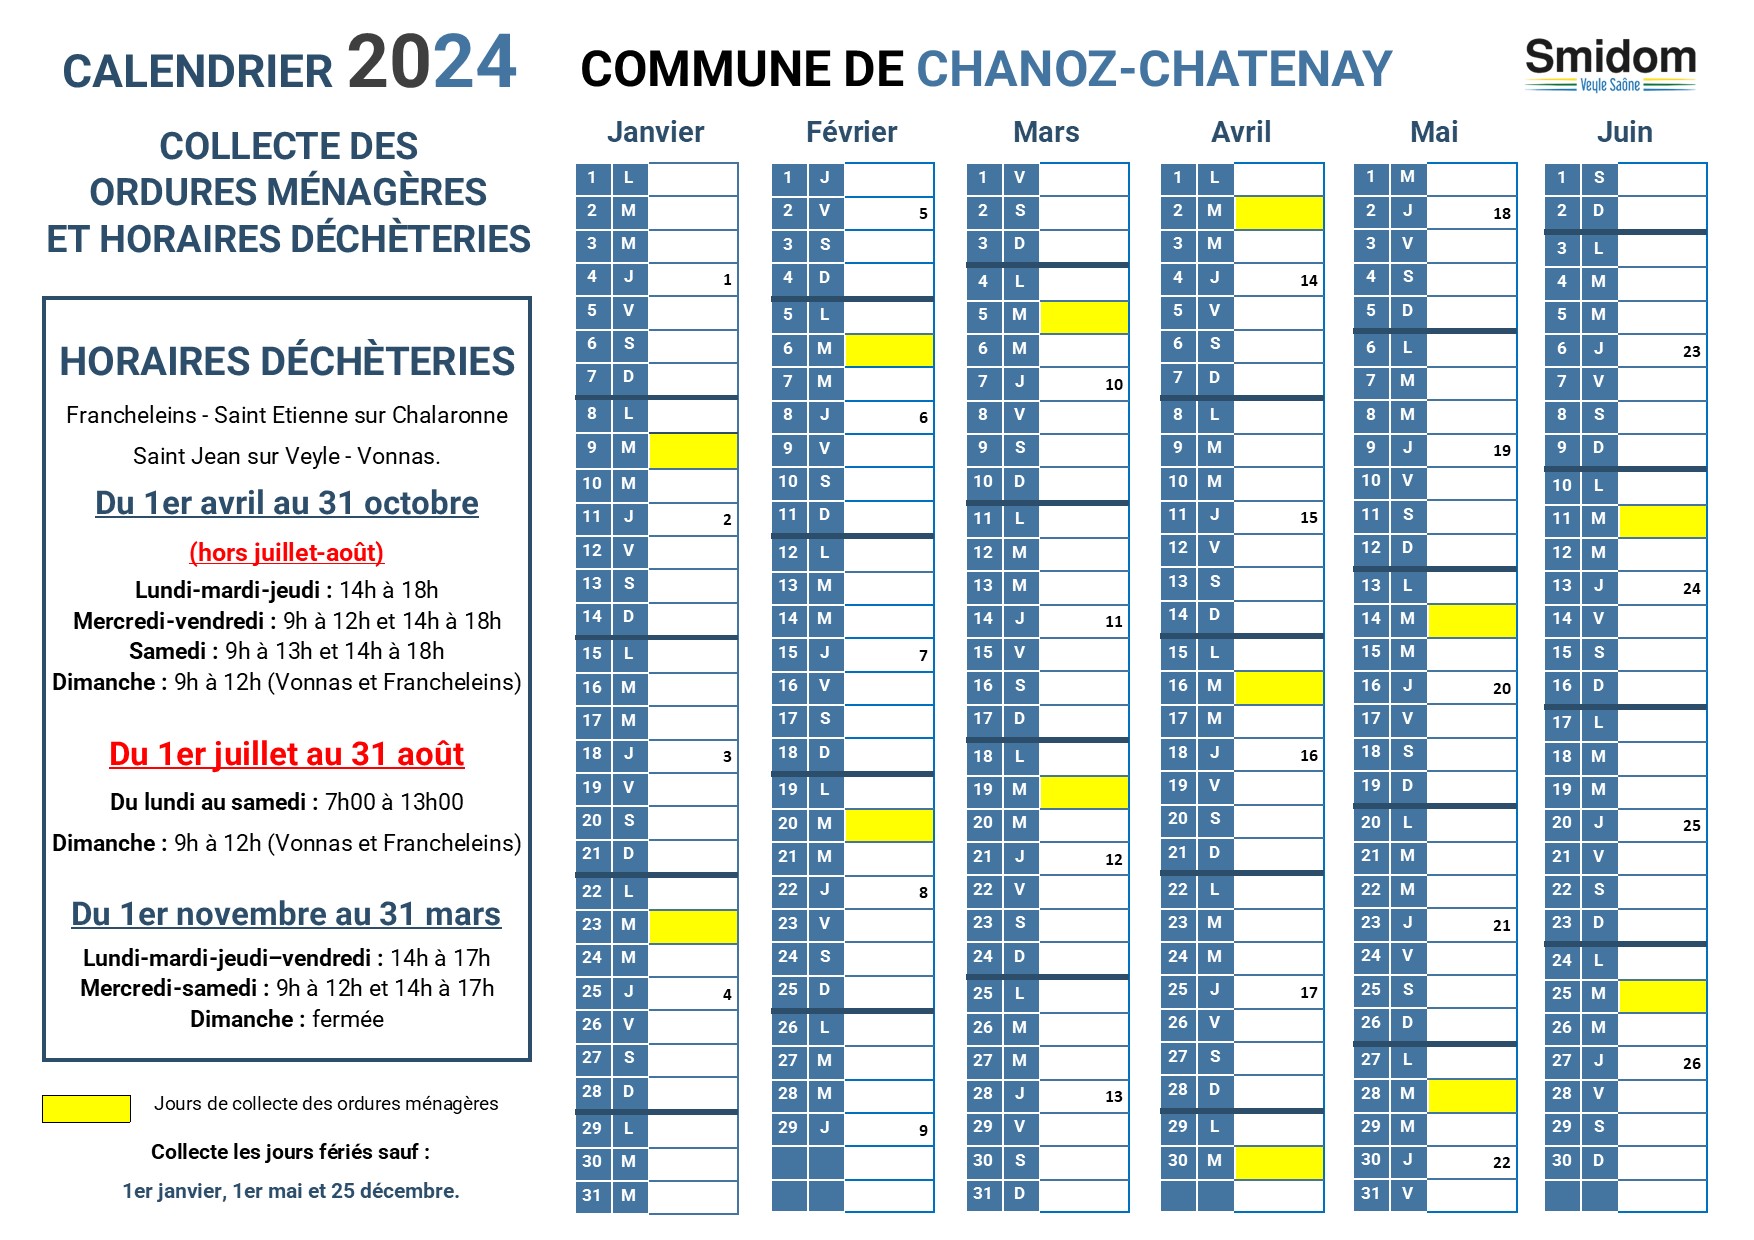 CHANOZ CHATENAY - Calendrier 2024 - 1.jpg